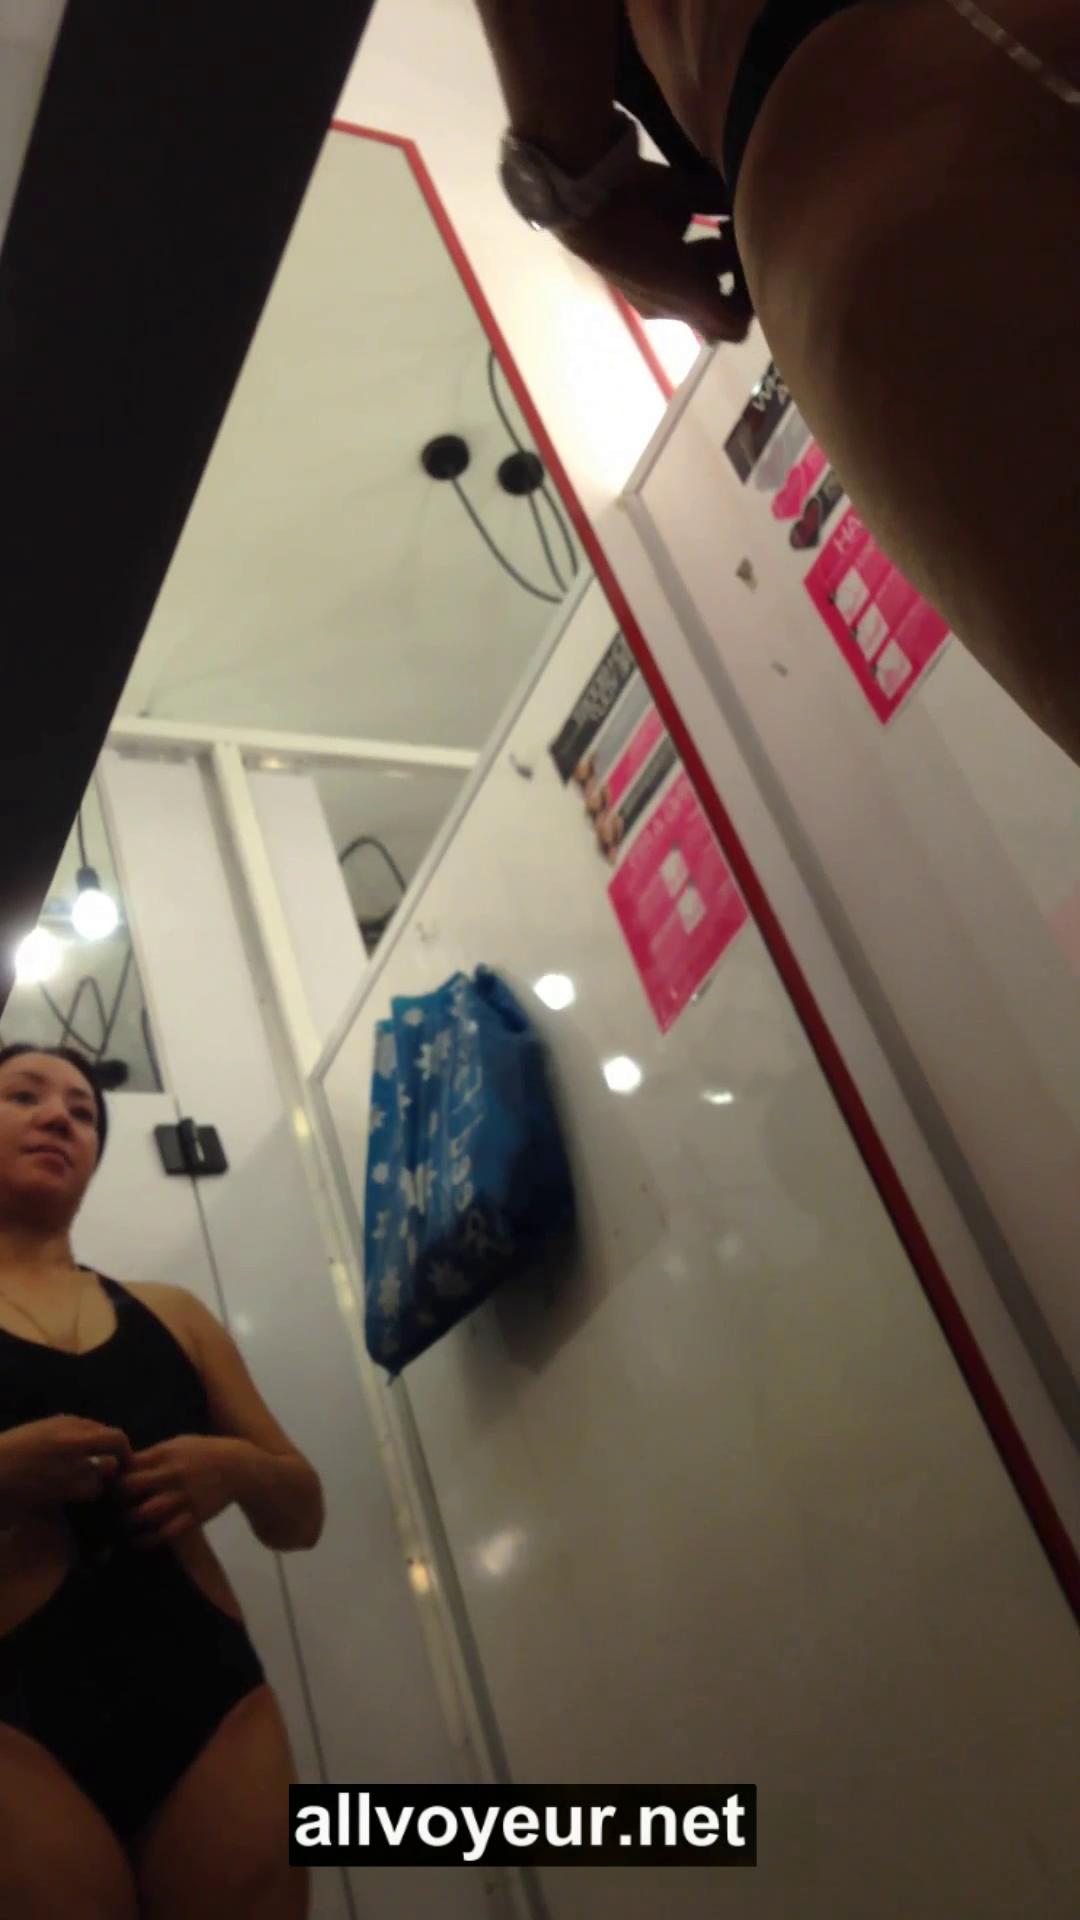 indonesian voyeur changing room Adult Pics Hq